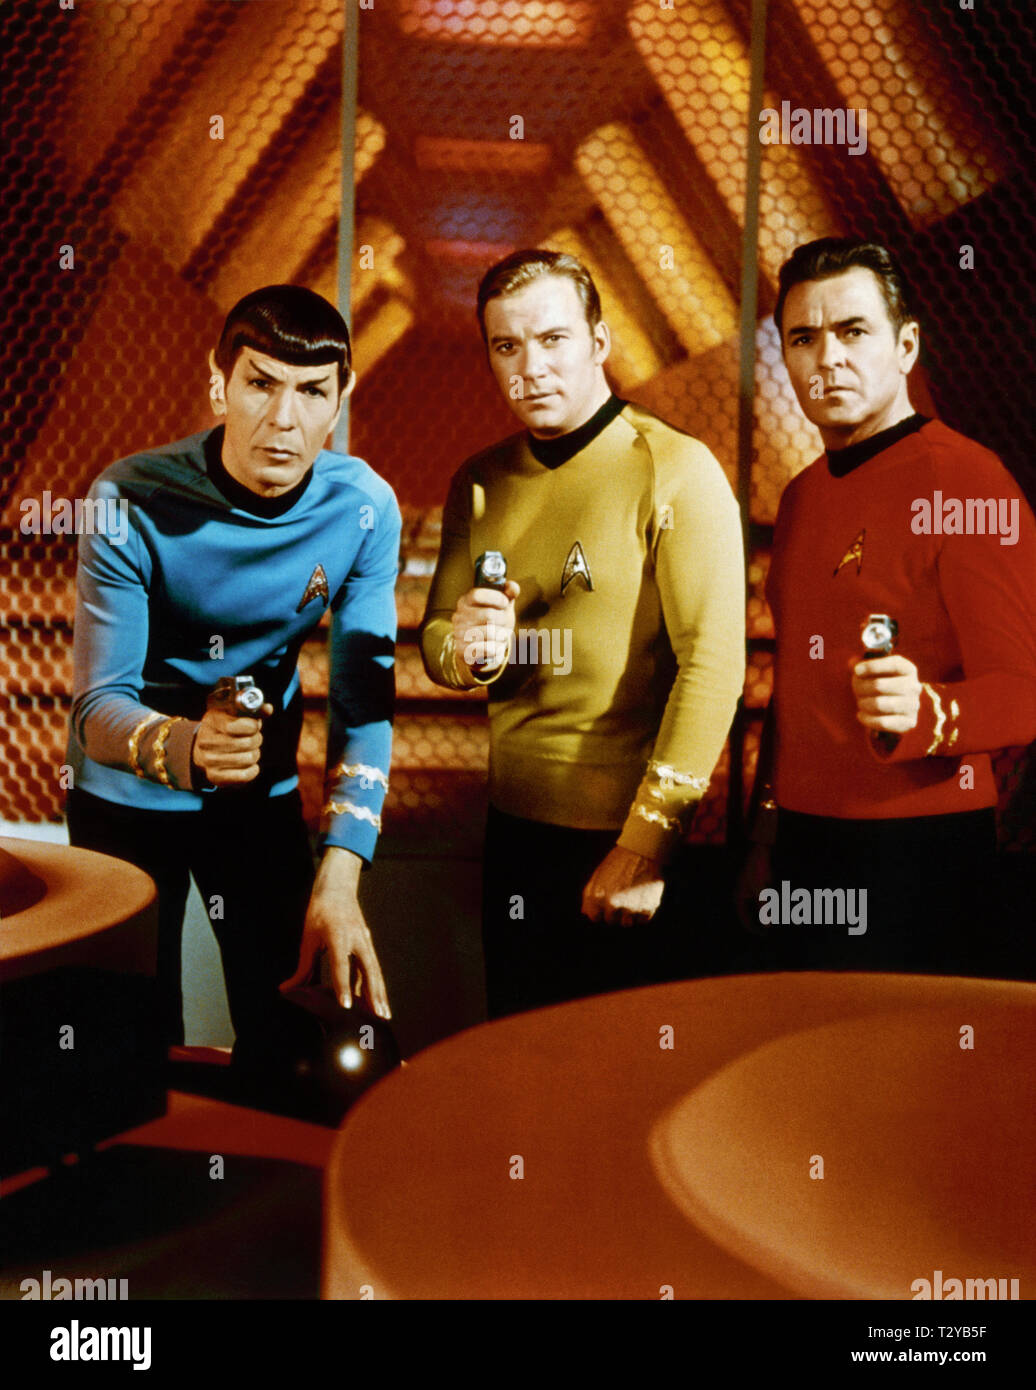 LEONARD NIMOY, WILLIAM SHATNER, JAMES DOOHAN, STAR TREK, 1966 Stock Photo